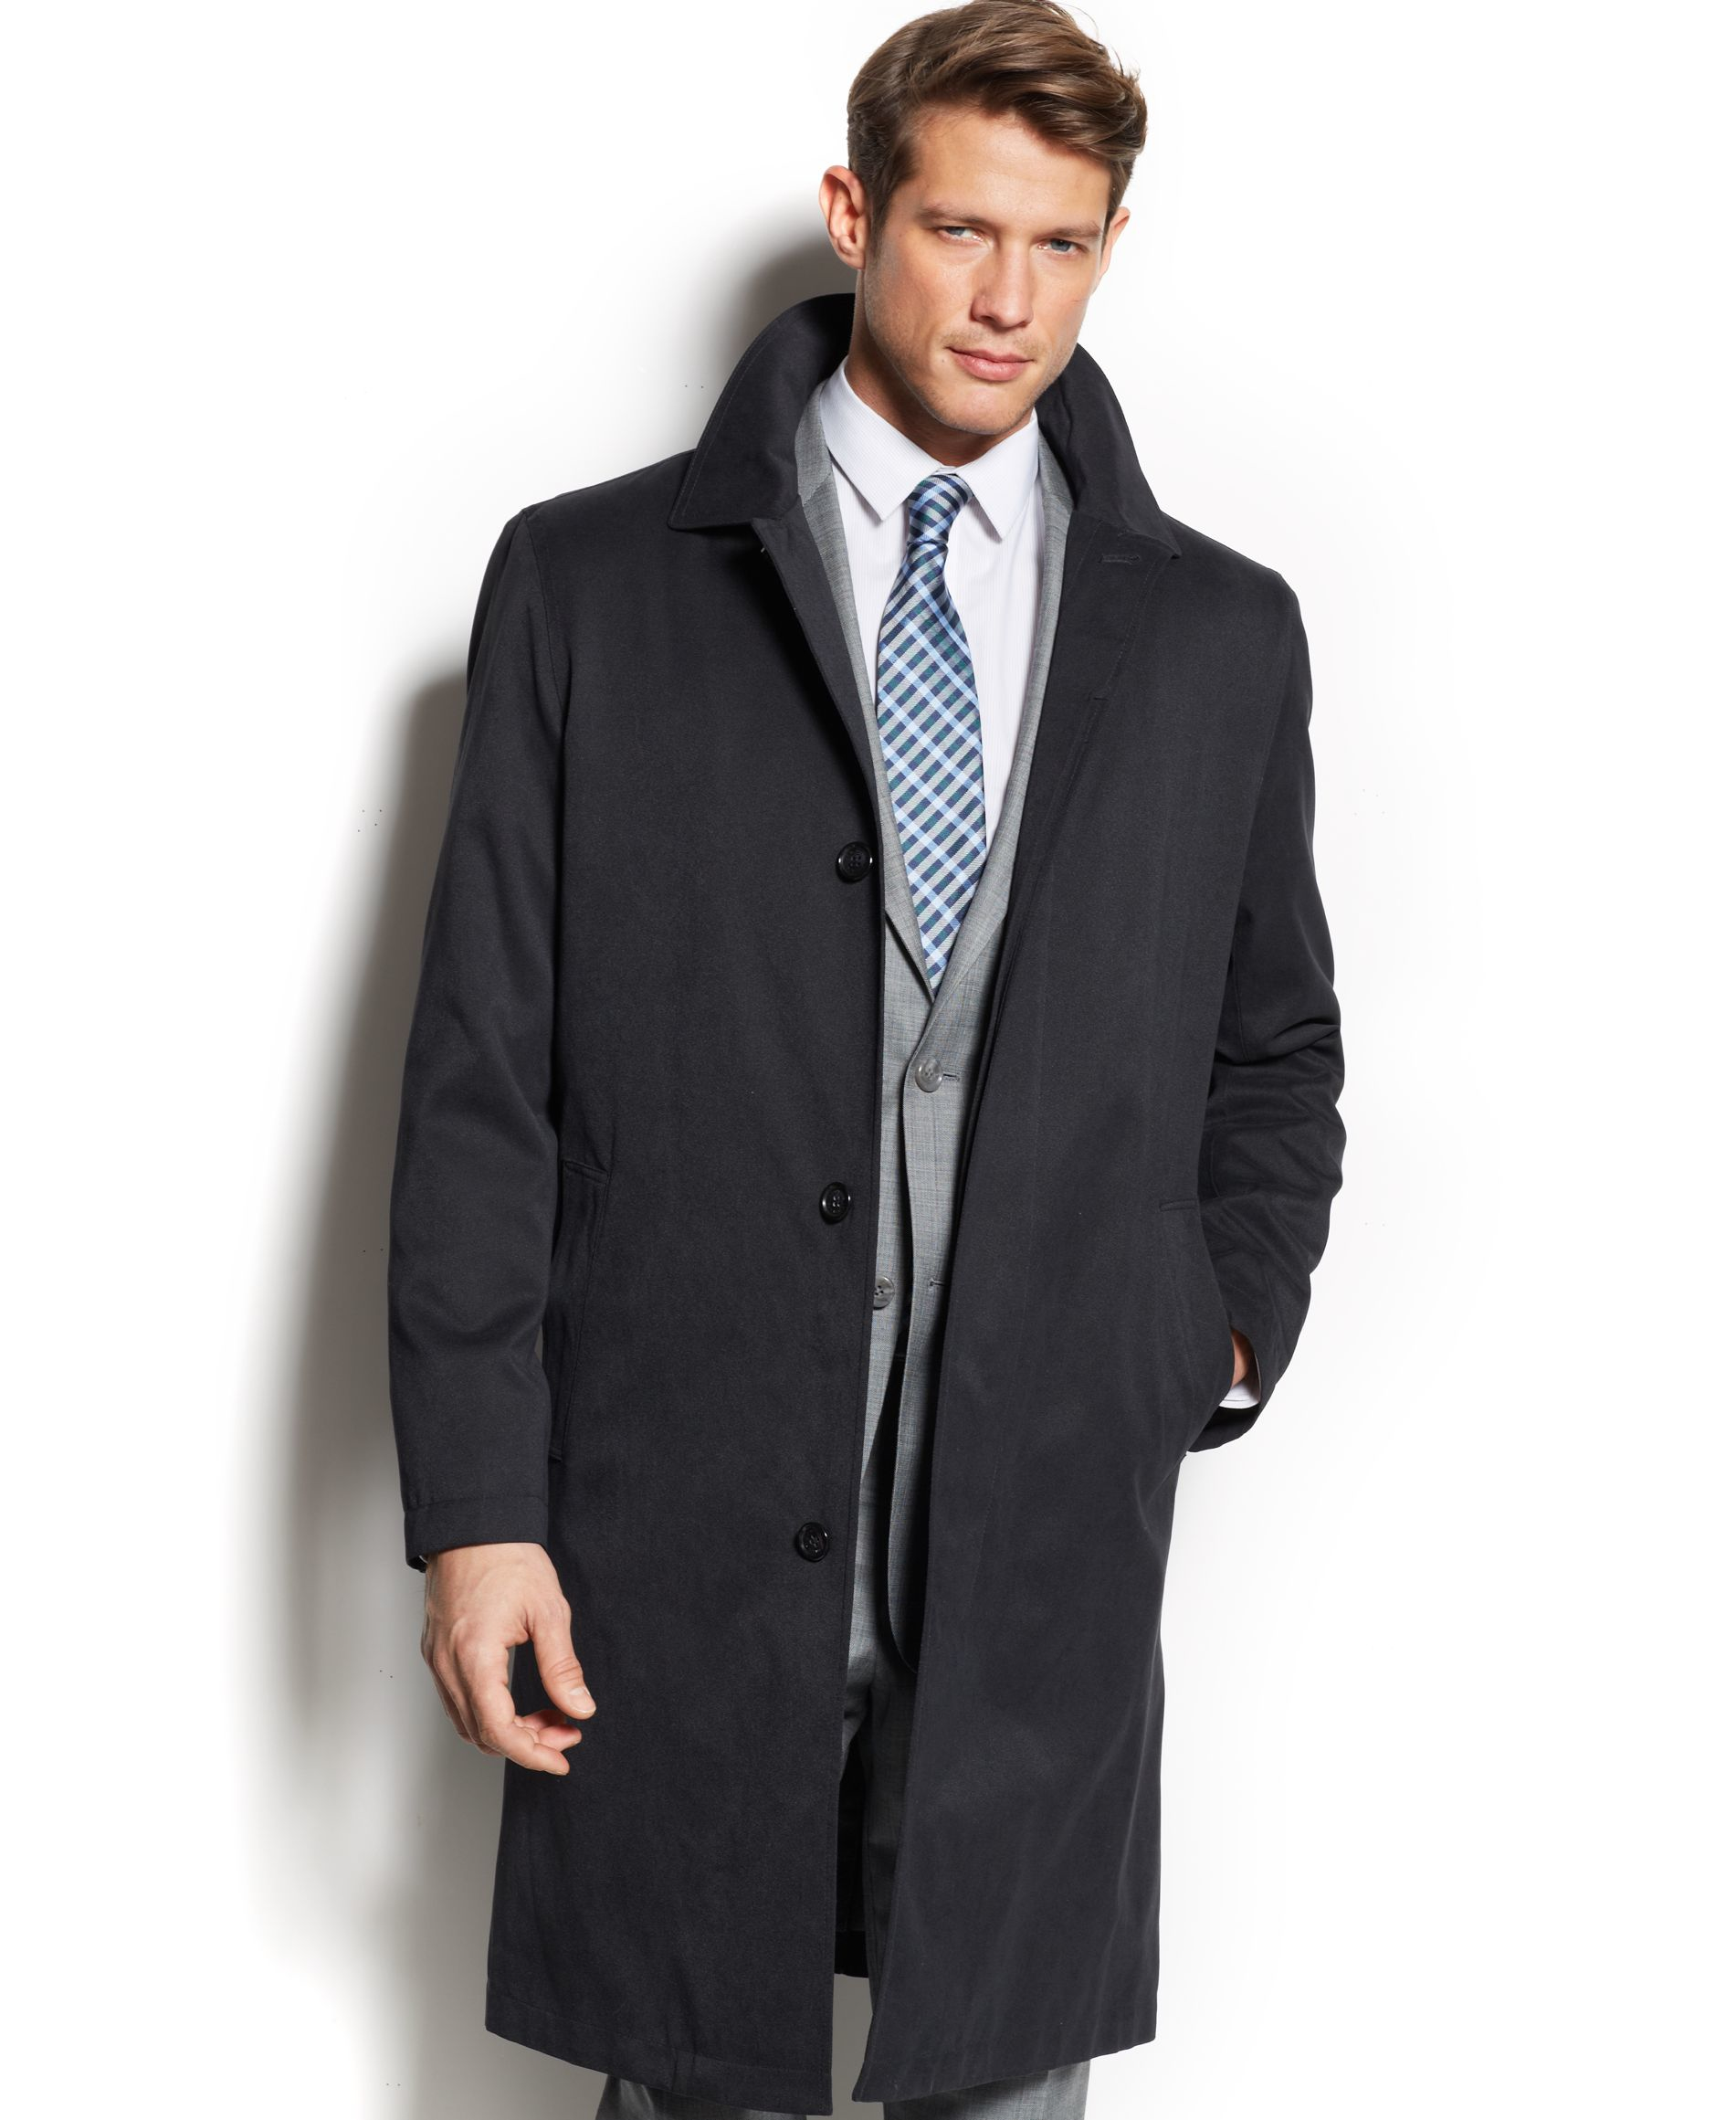 Lyst - London Fog Coat Durham Raincoat in Black for Men